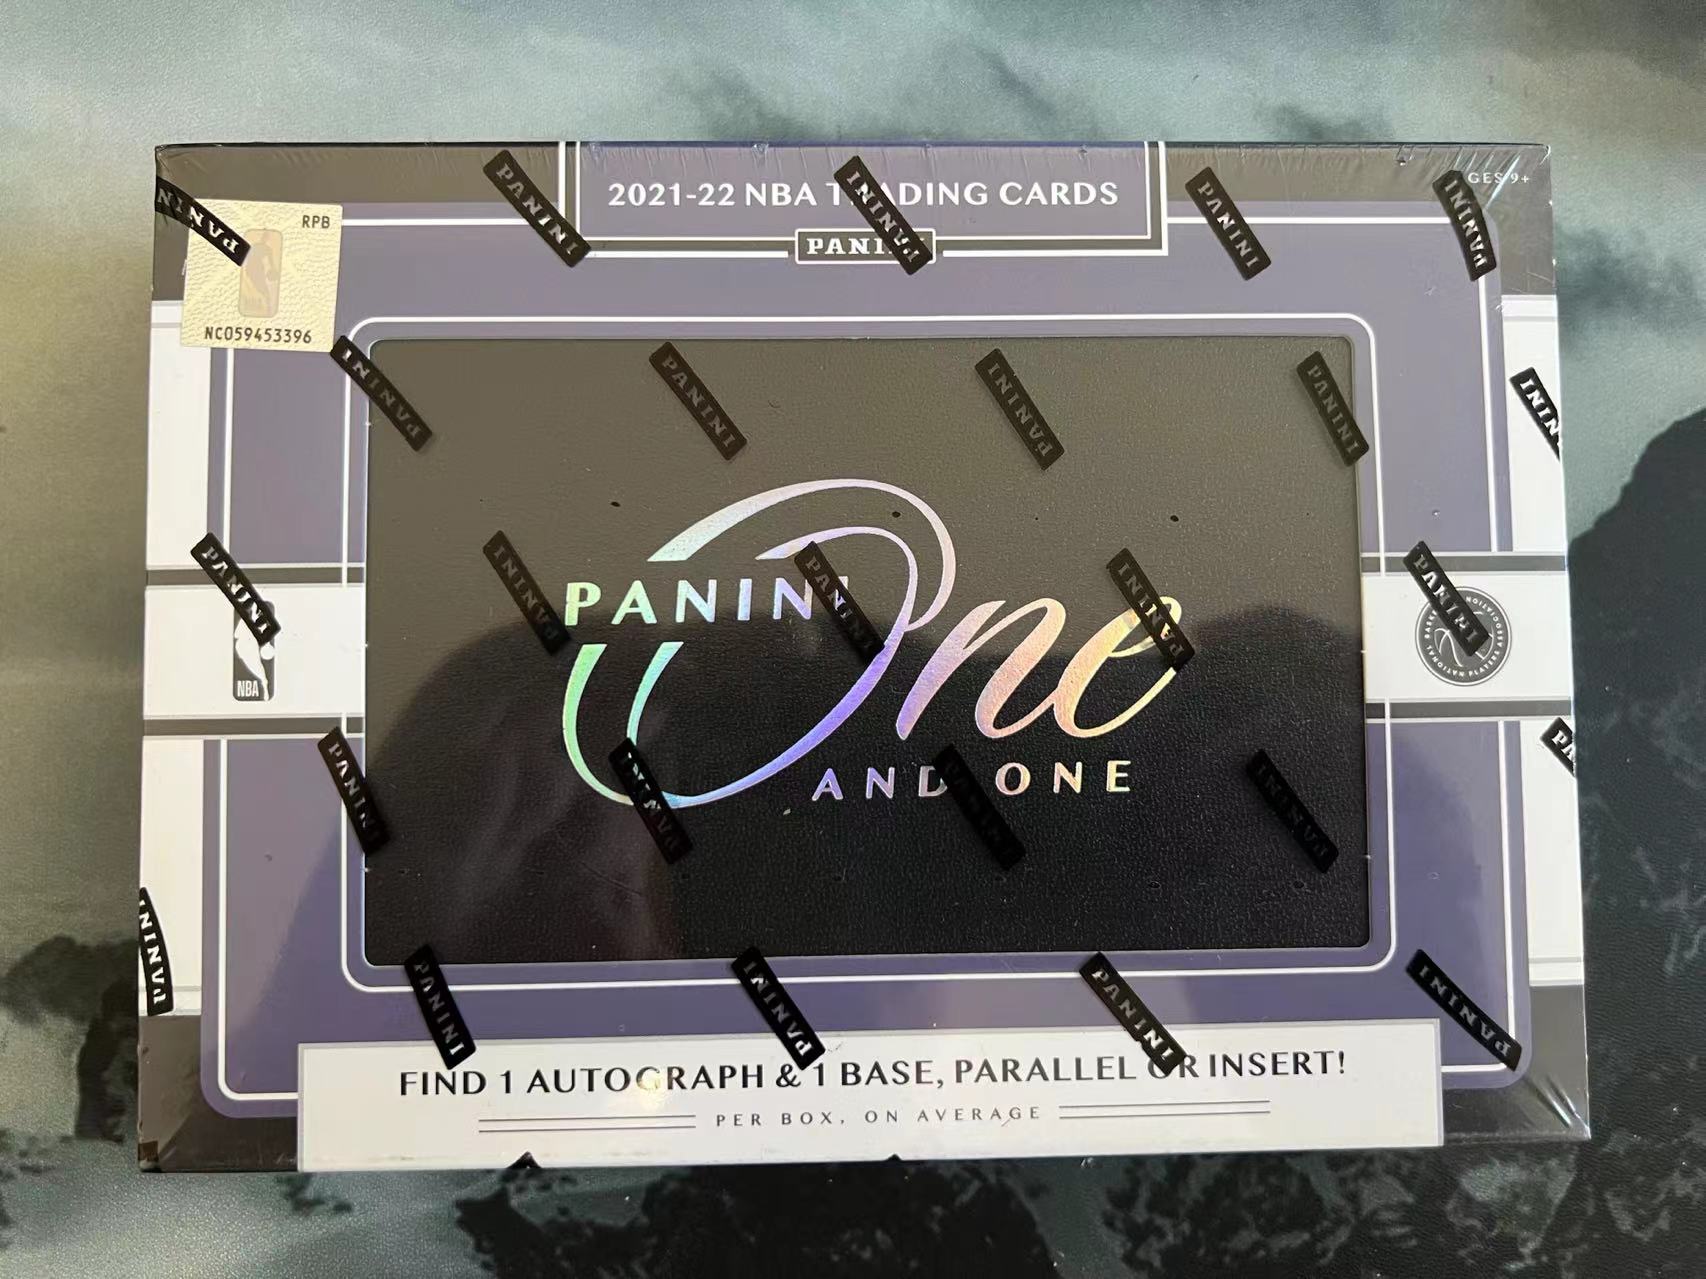 2021-22 Panini Base 2021 Panini One and One   原盒 原封盒 官散 单盒出售 搏时刻卡签 downtown  卡店清仓 品质保证 可开票 第一盒